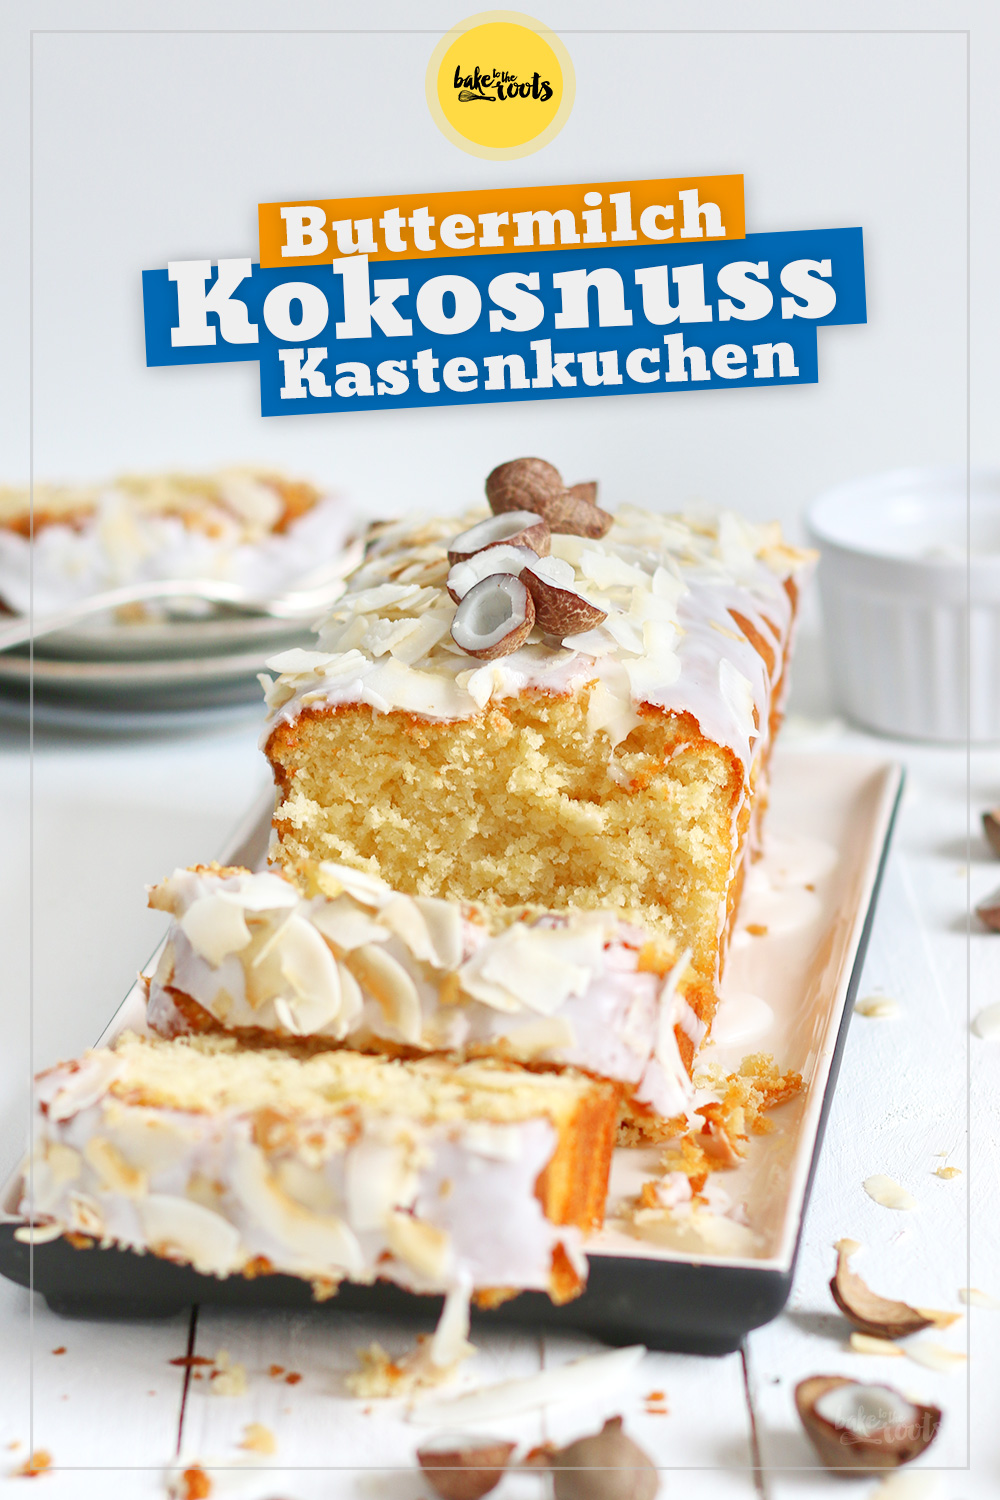 Buttermilch Kokosnuss Kastekuchen | Bake to the roots